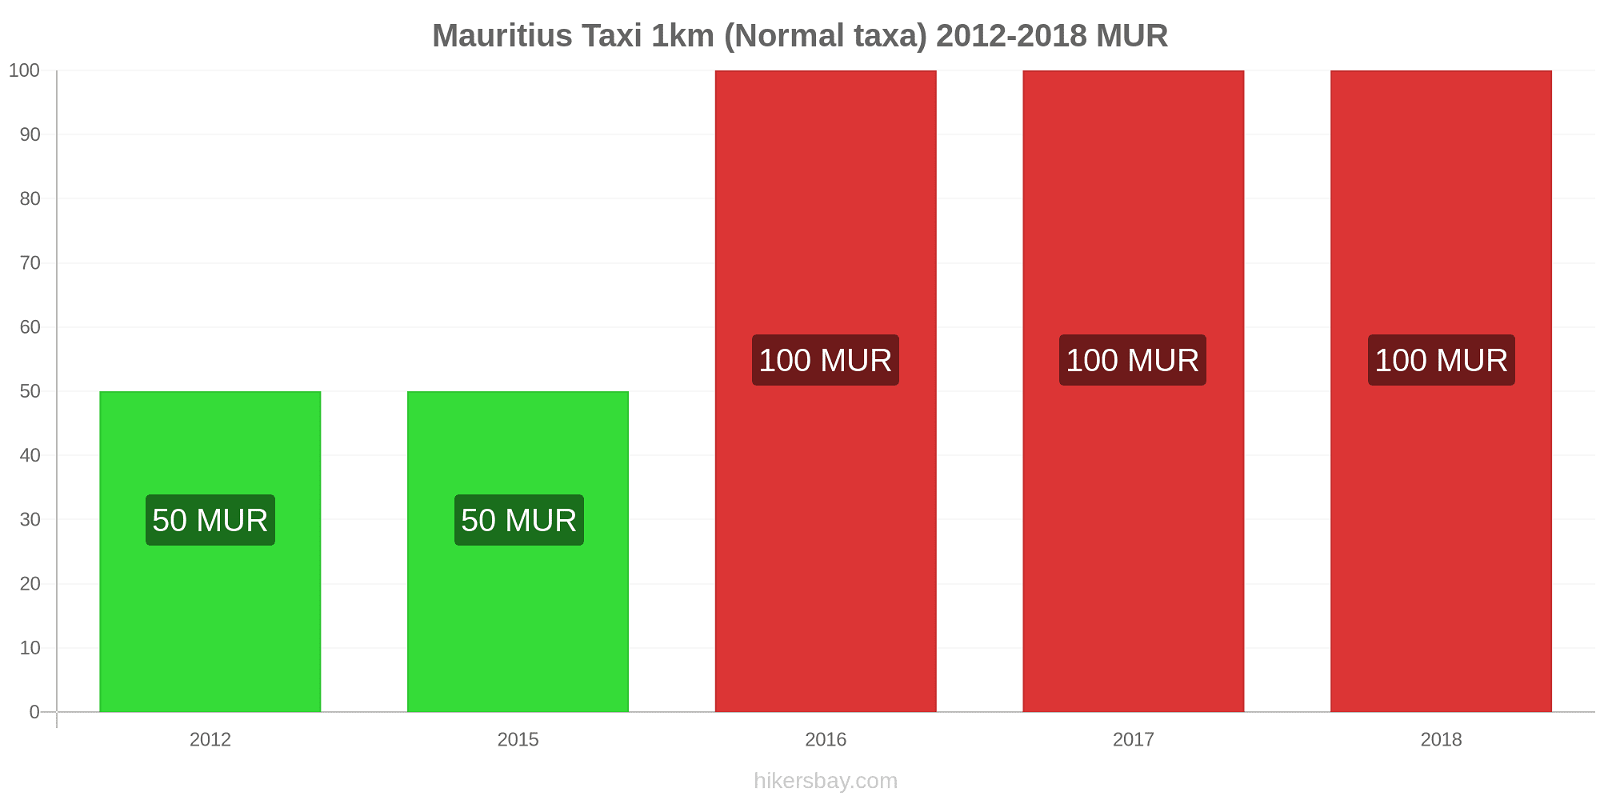 Mauritius prisändringar Taxi 1km (Normal taxa) hikersbay.com